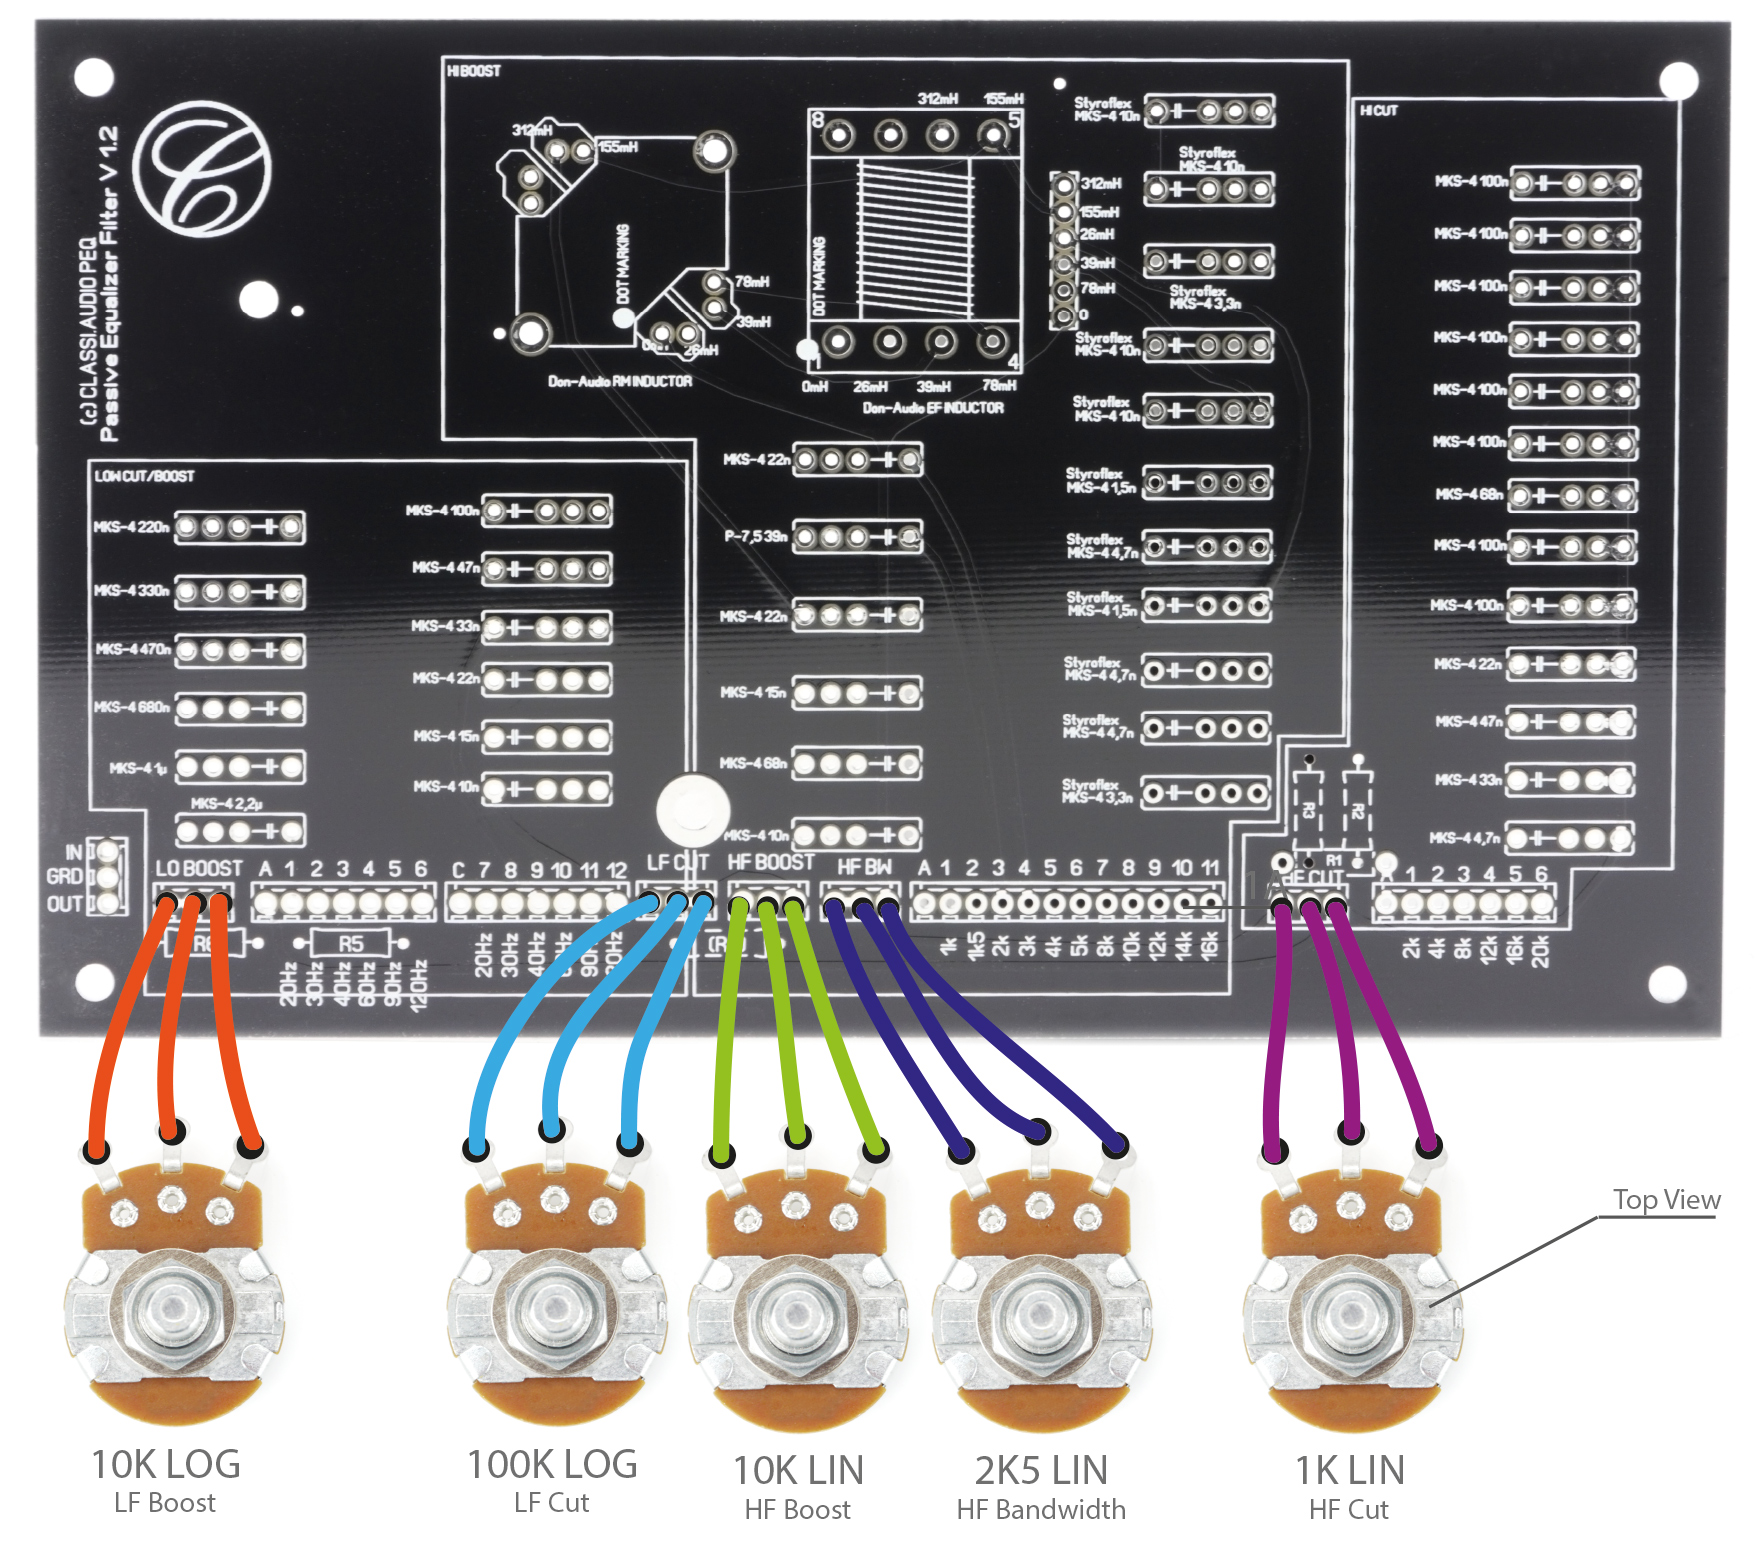 classi-peq-pcb-detail-potentiometer-wiring.jpg